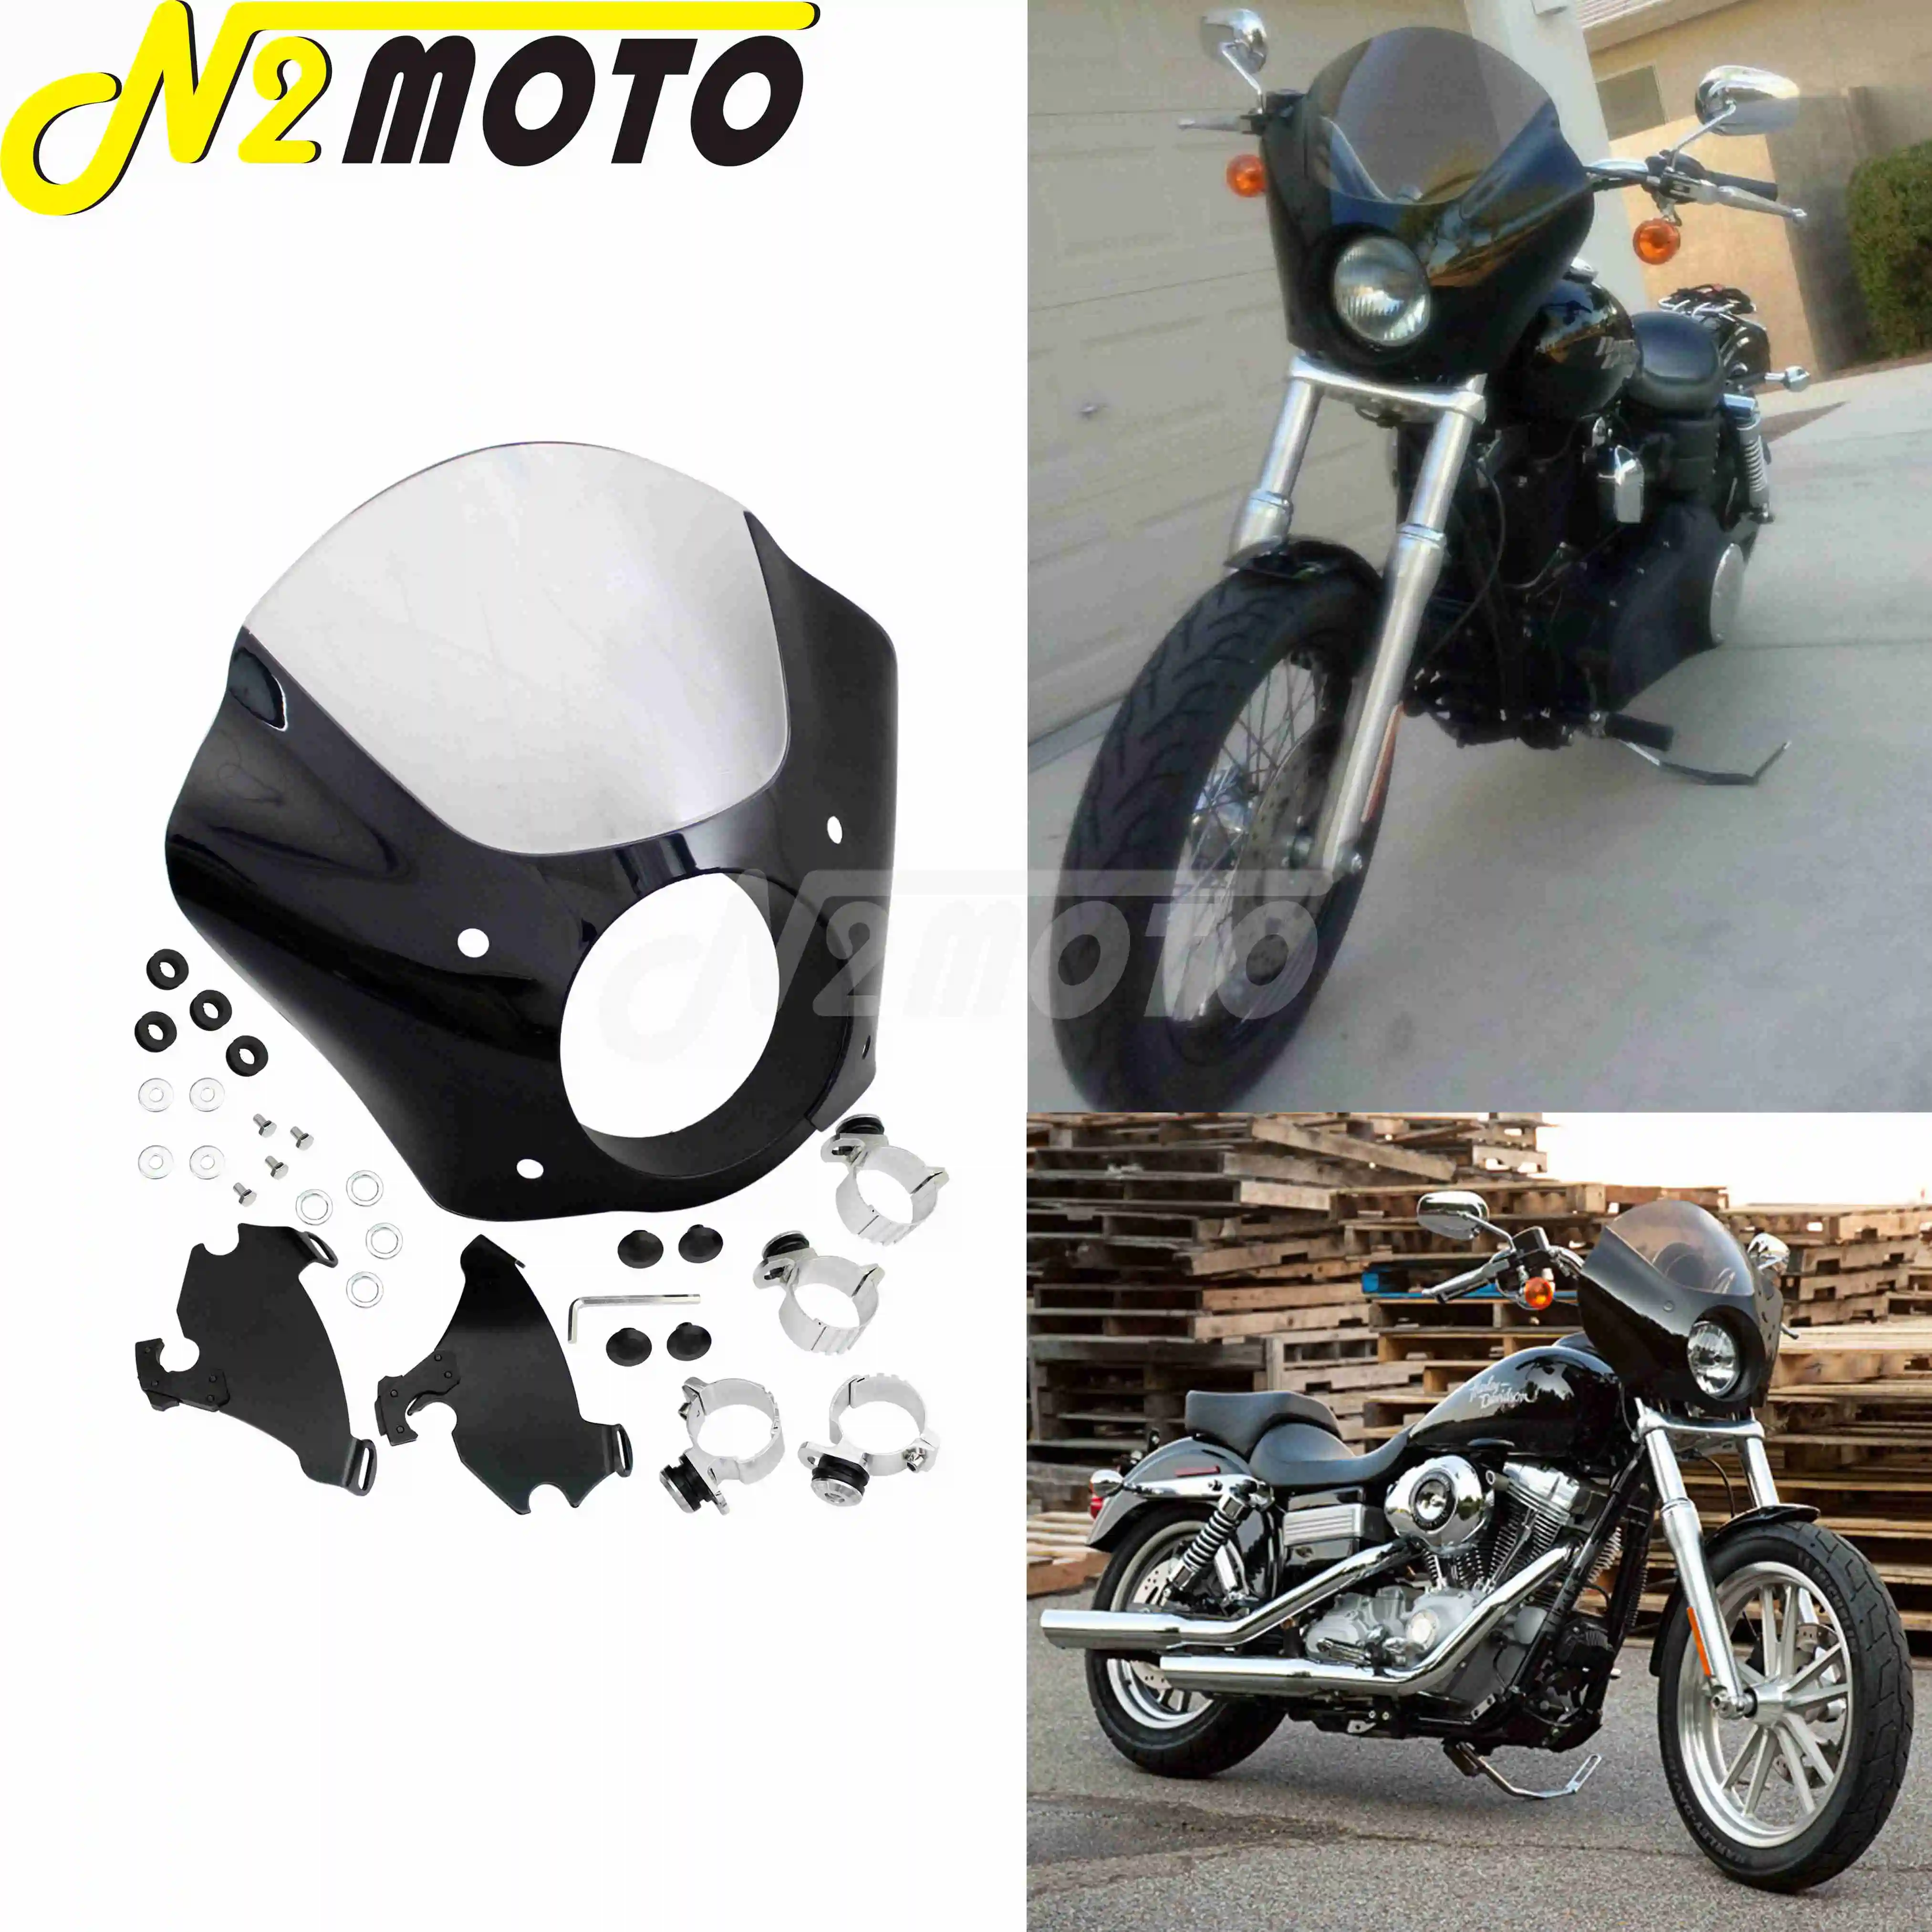 Motorcycle Accessories Gauntlet Fairing Headlight Cowl Bracket For Harley Sportster XL 883 1200 Street Glide Fat Bob Cafe Racer